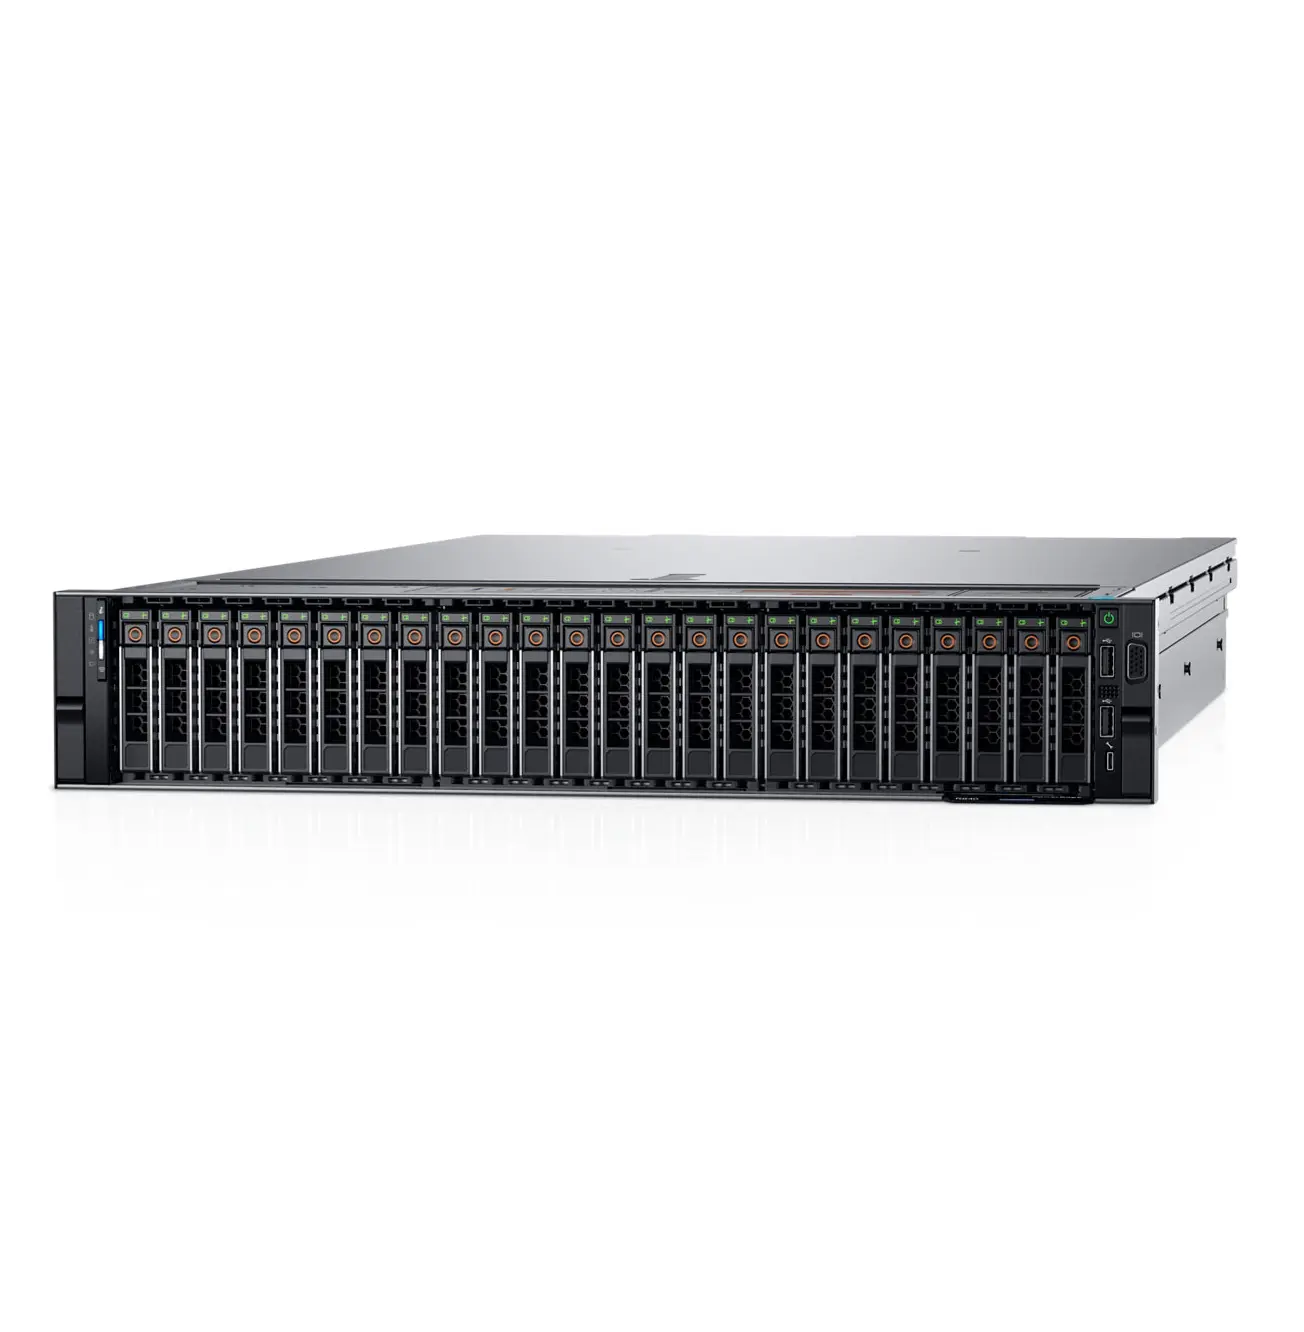 PowerEdge R840 2U high-performance Four-way rack server